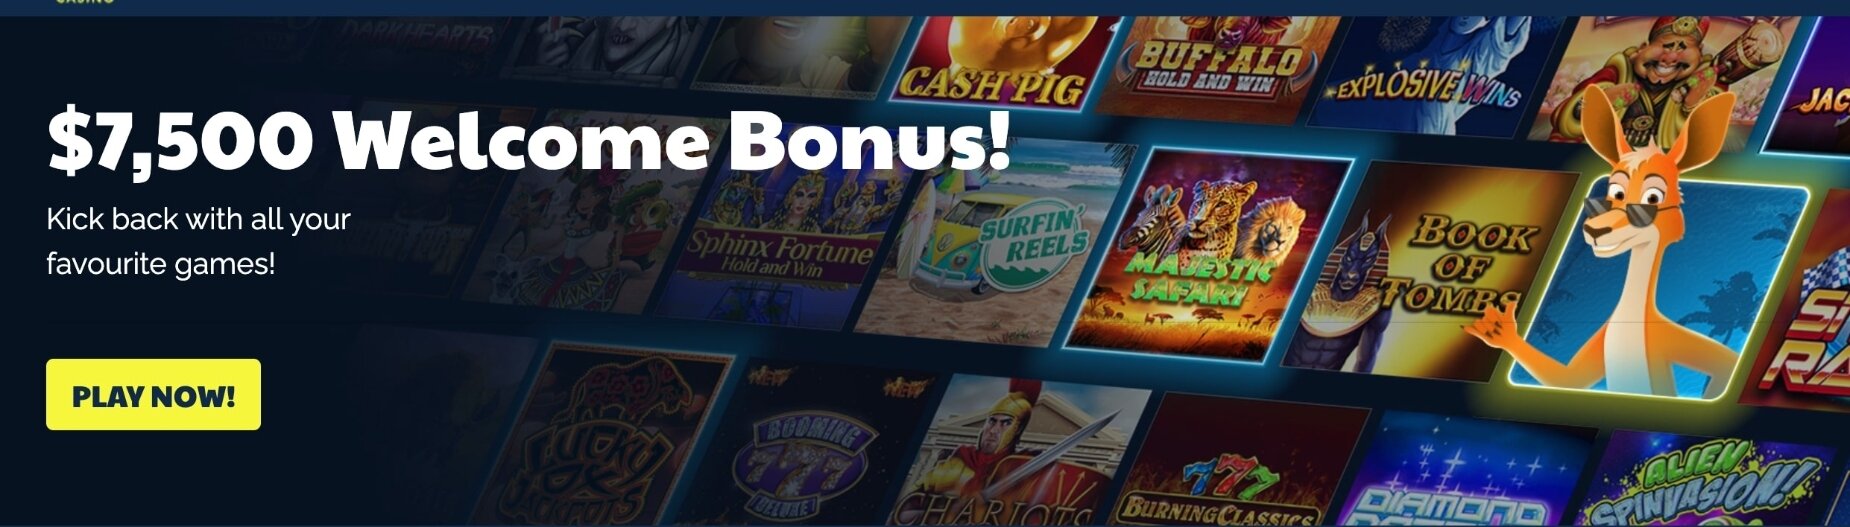 ripper casino welcome bonus